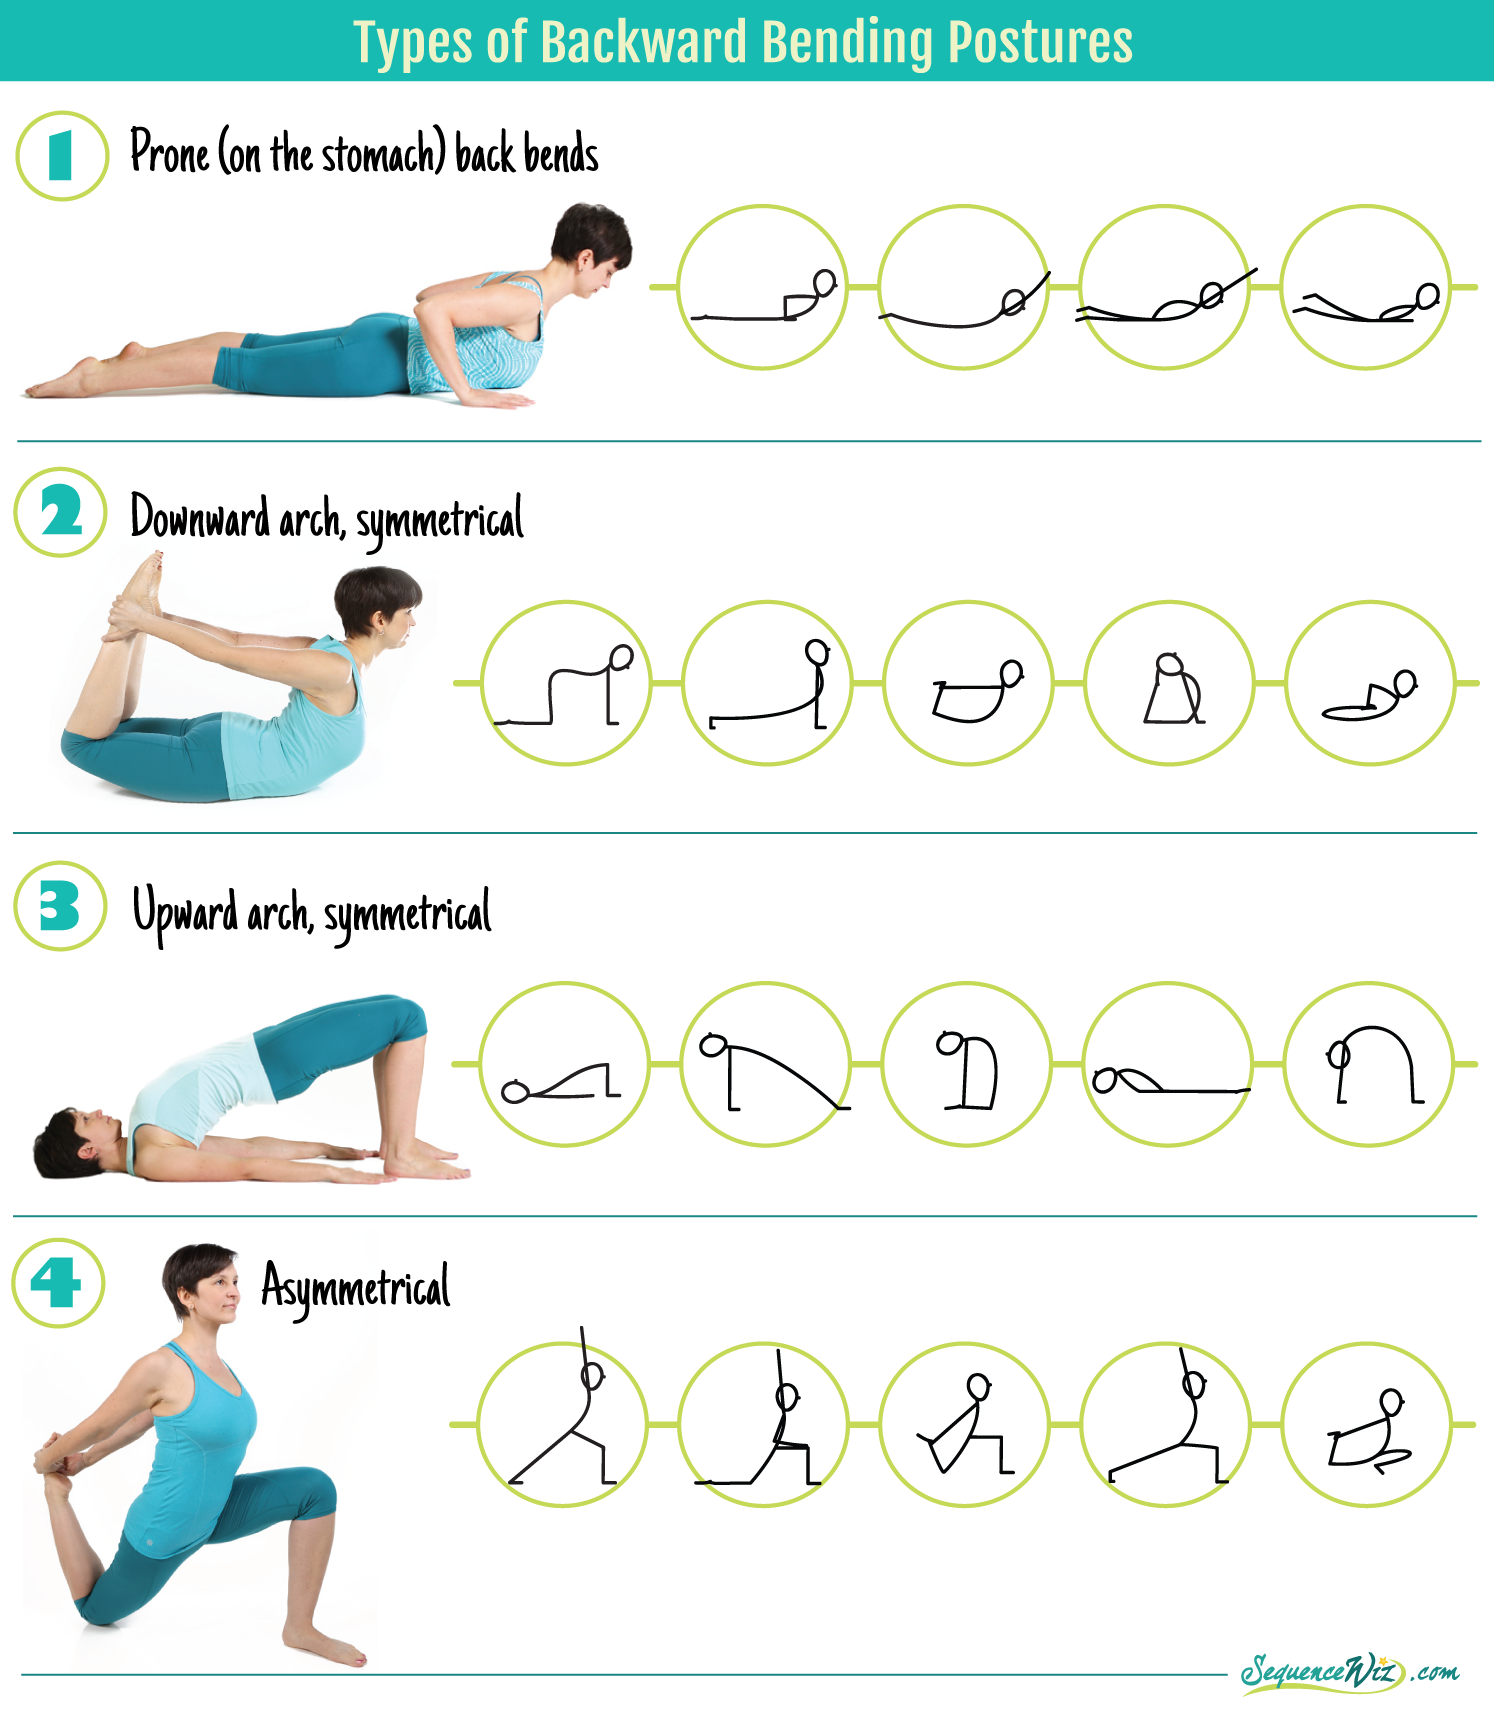 The Art of Back Bending in Yoga|Blog|Elixr Health Clubs